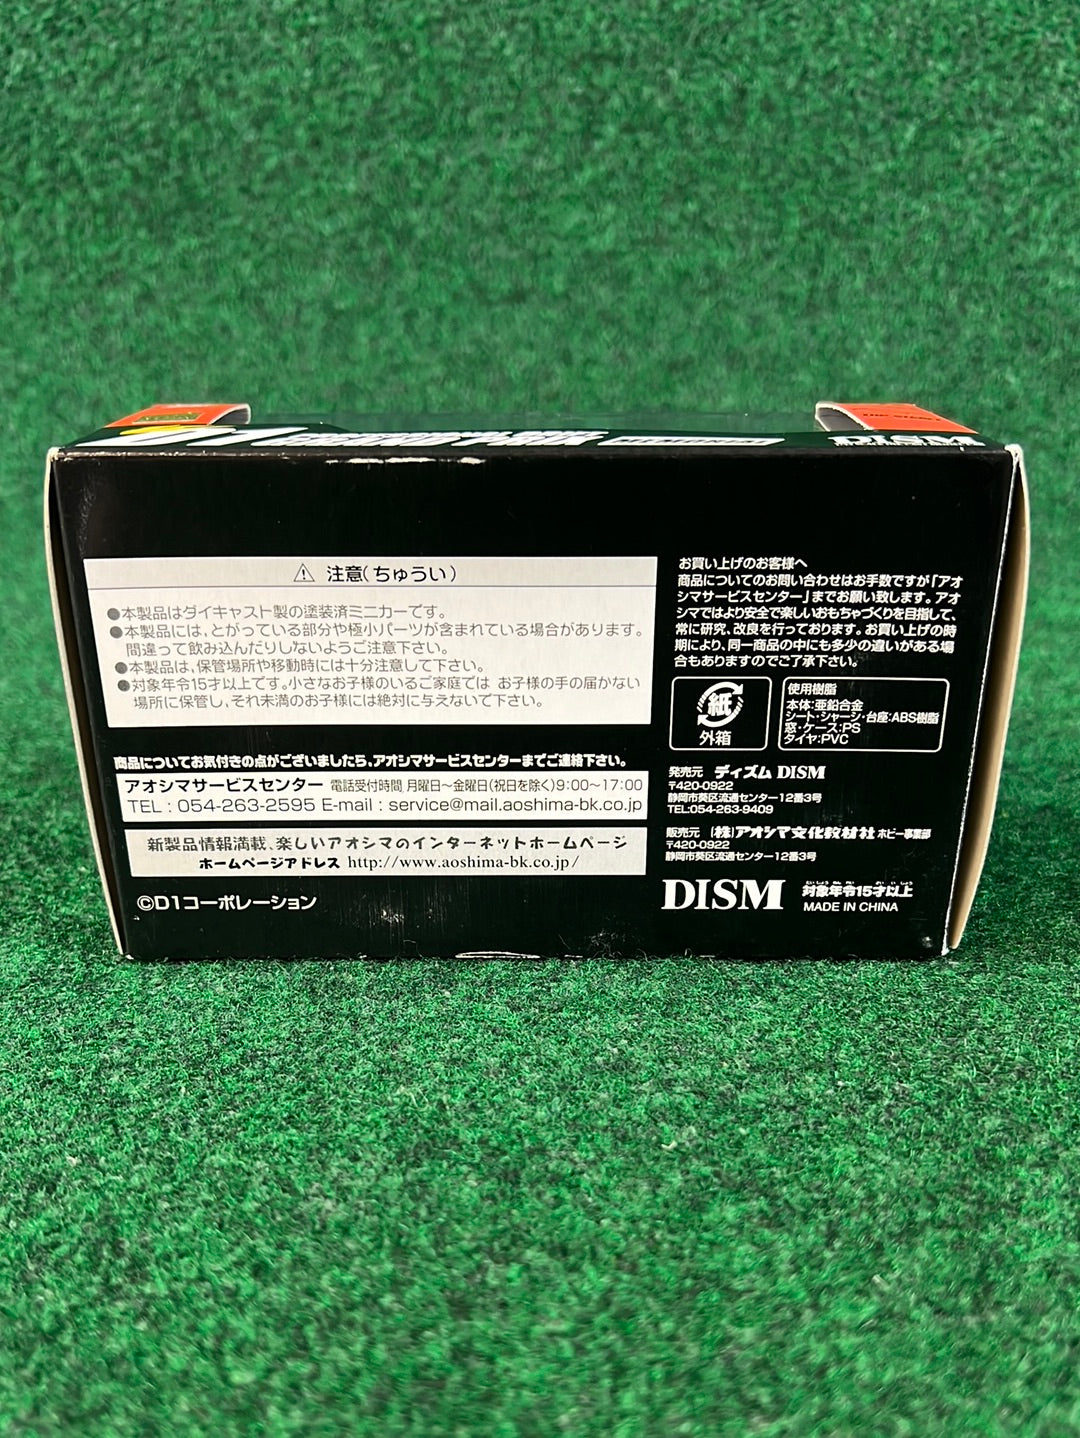 DISM D1 Grand Prix Memorial - 2003 Kei Office Nissan Silvia S15 #1 Car 1/43 Scale Diecast